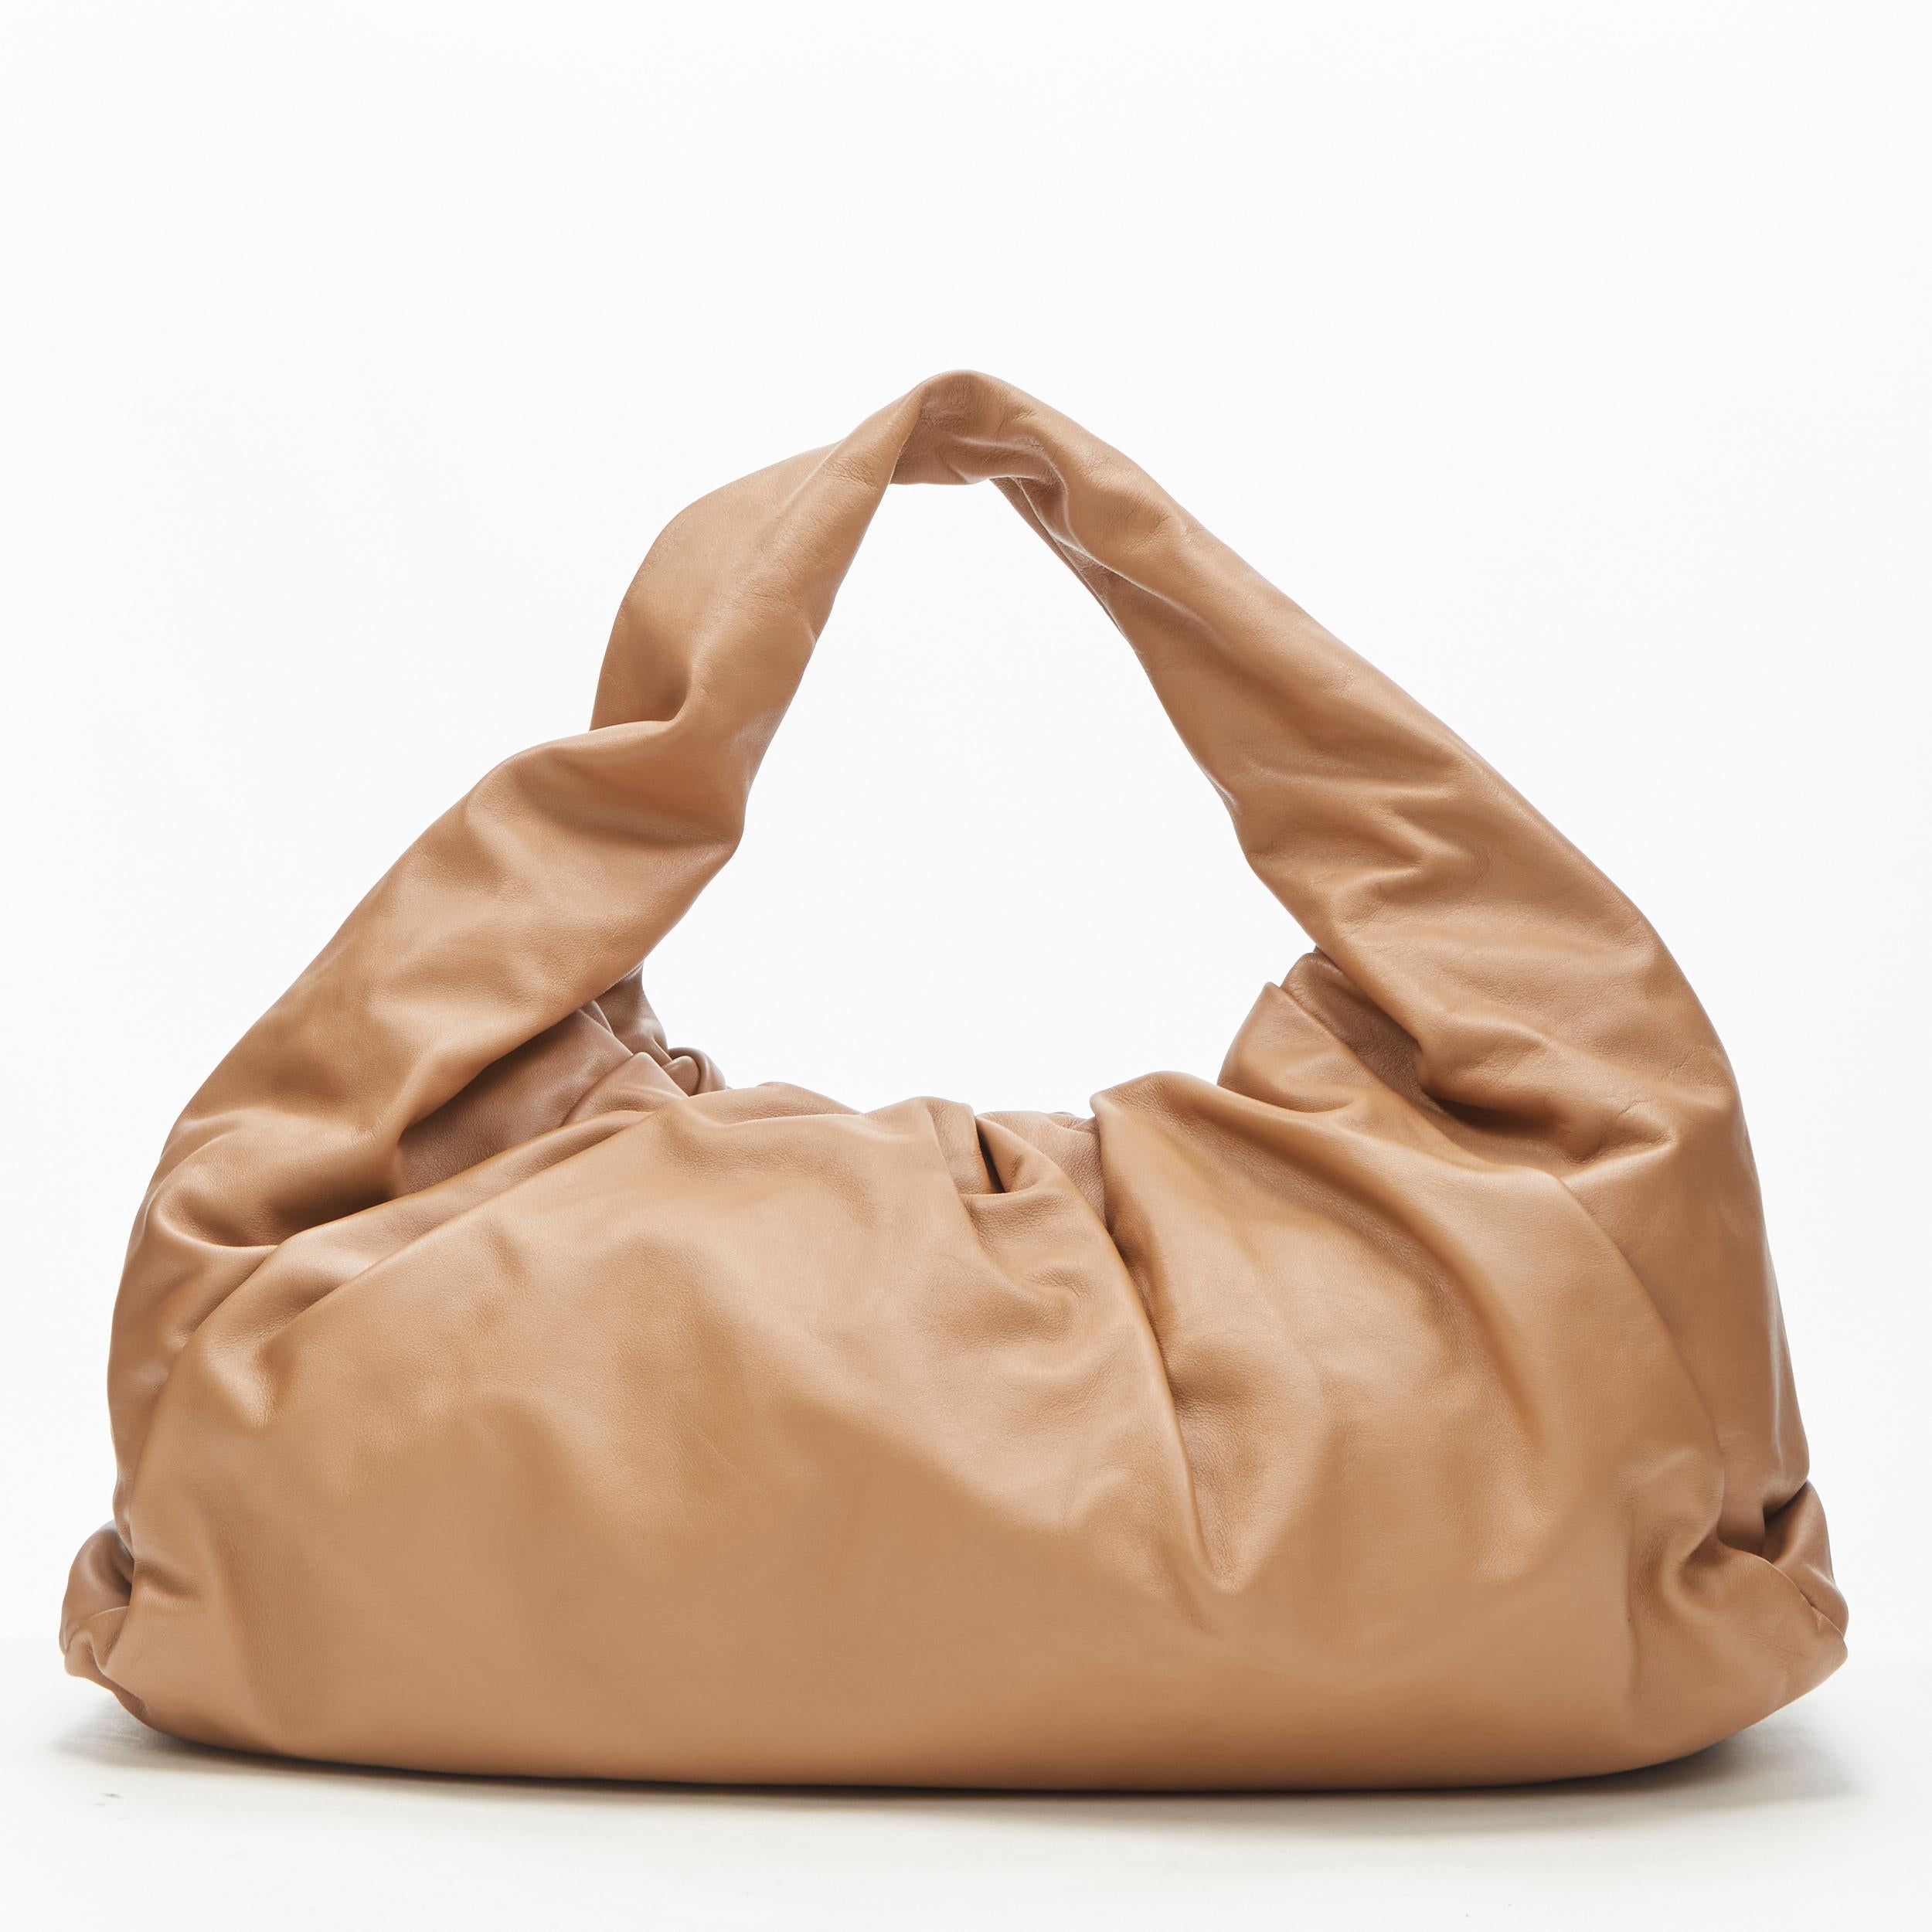 Women's BOTTEGA VENETA Daniel Lee The Shoulder Pouch brown leather gathered hobo bag For Sale